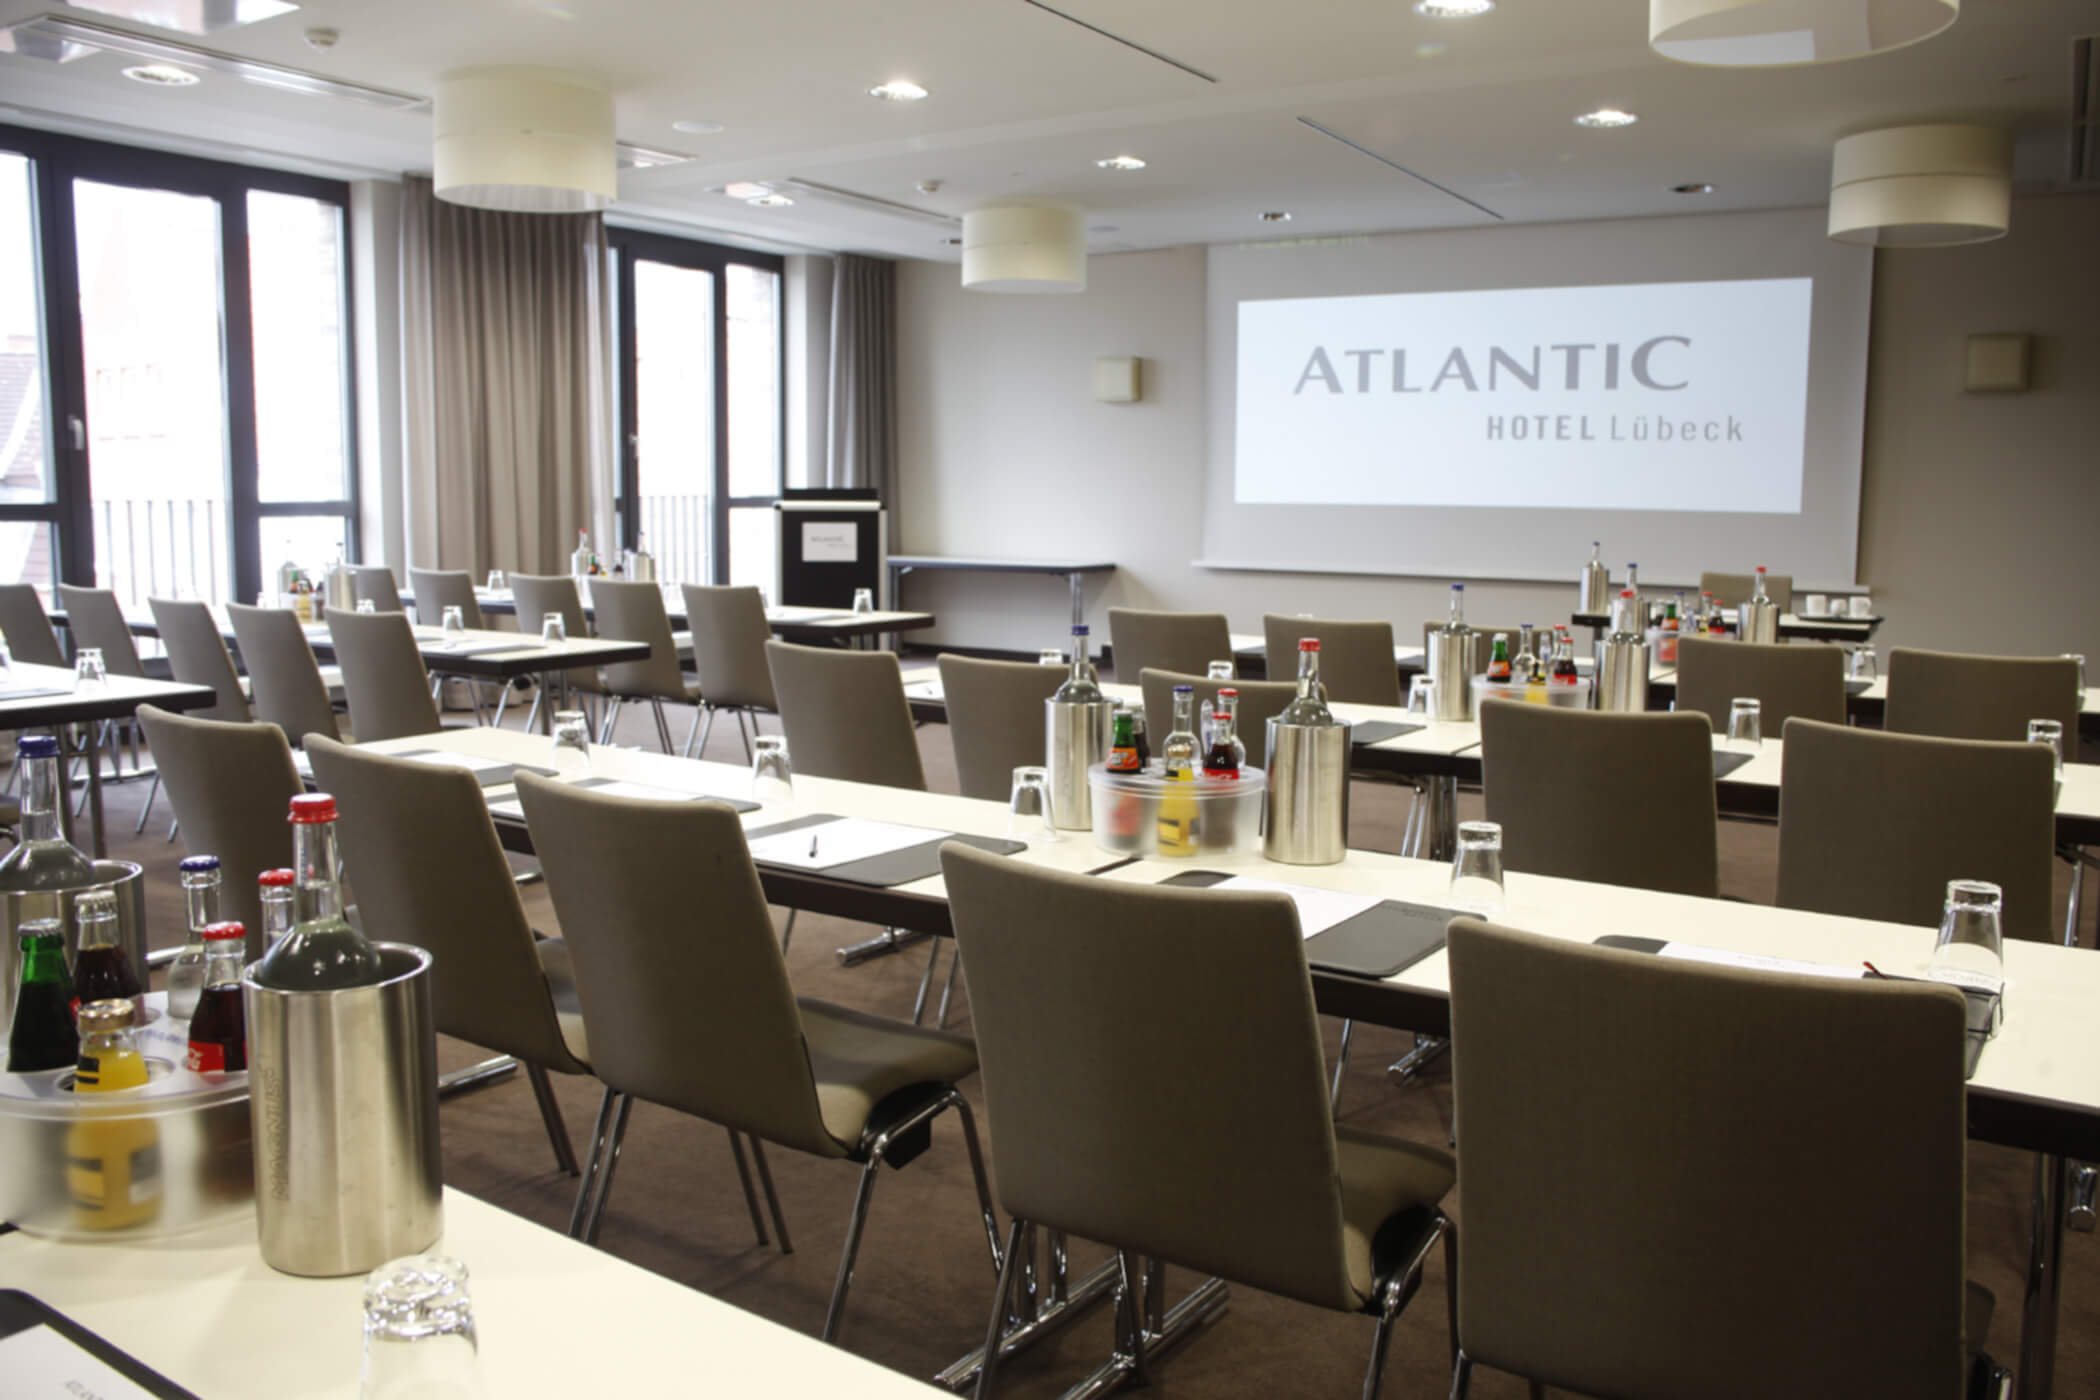 Function room conference 1 at ATLANTIC Hotel Lübeck